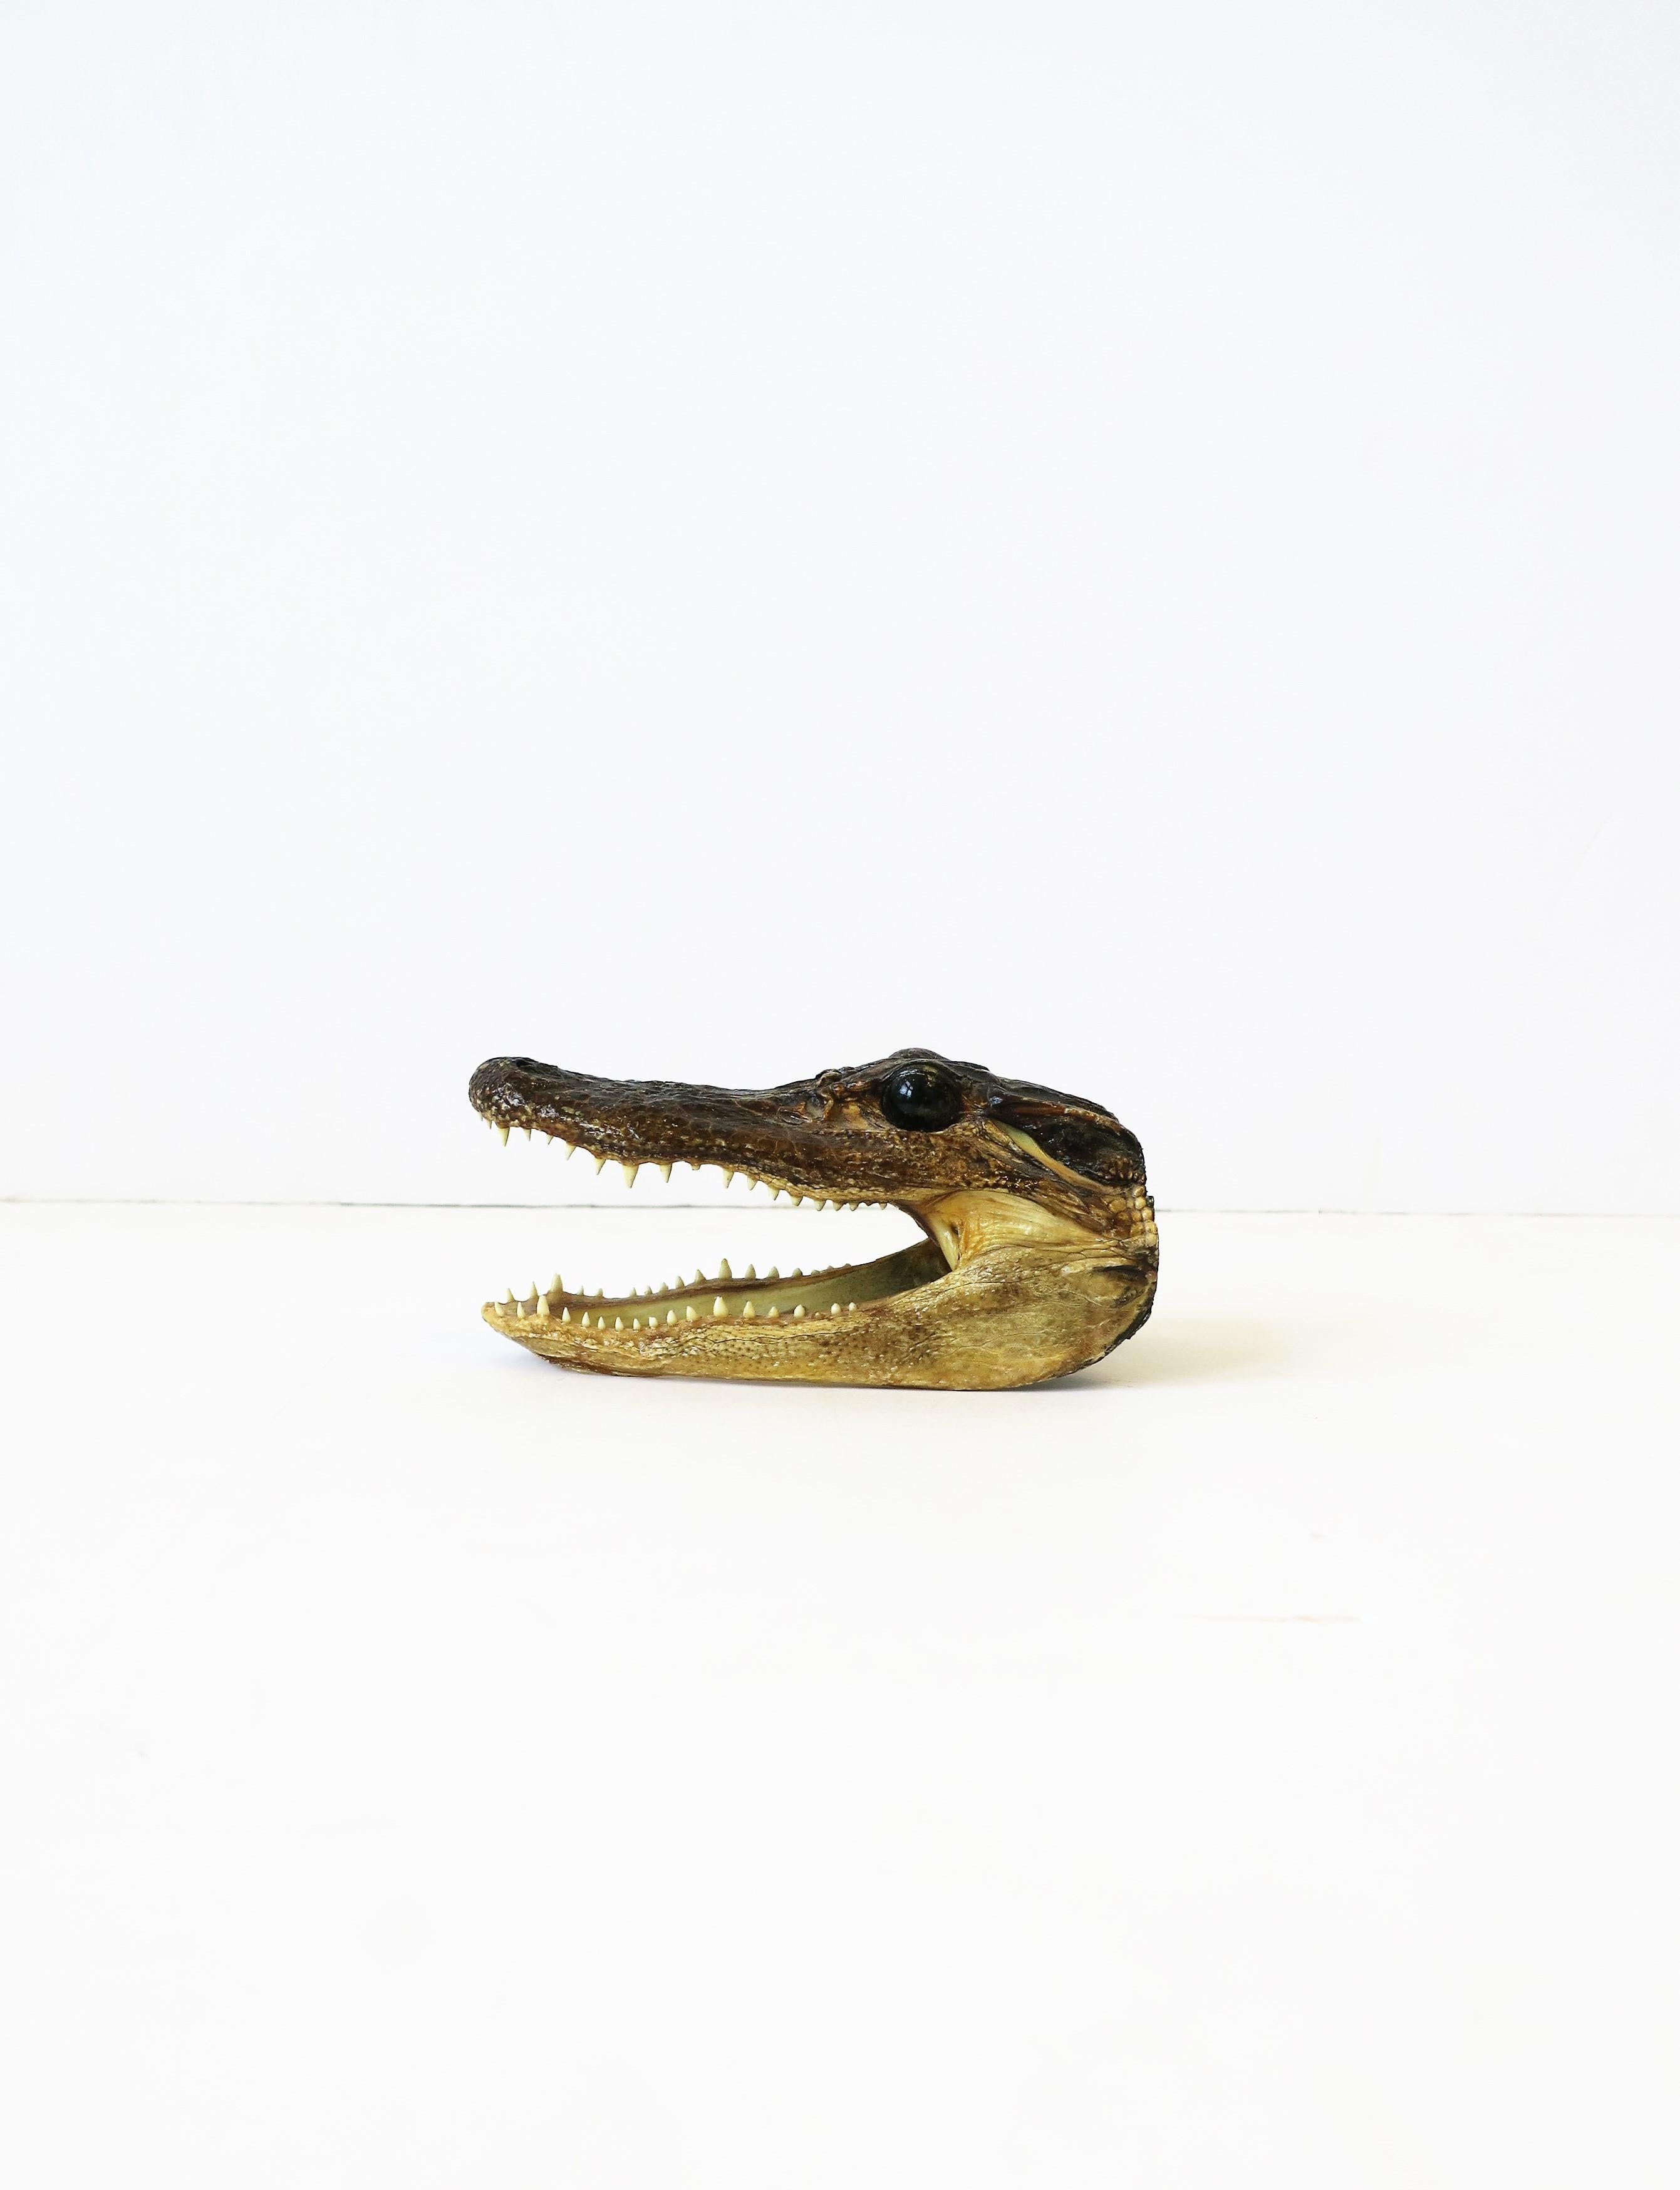 baby alligator skull